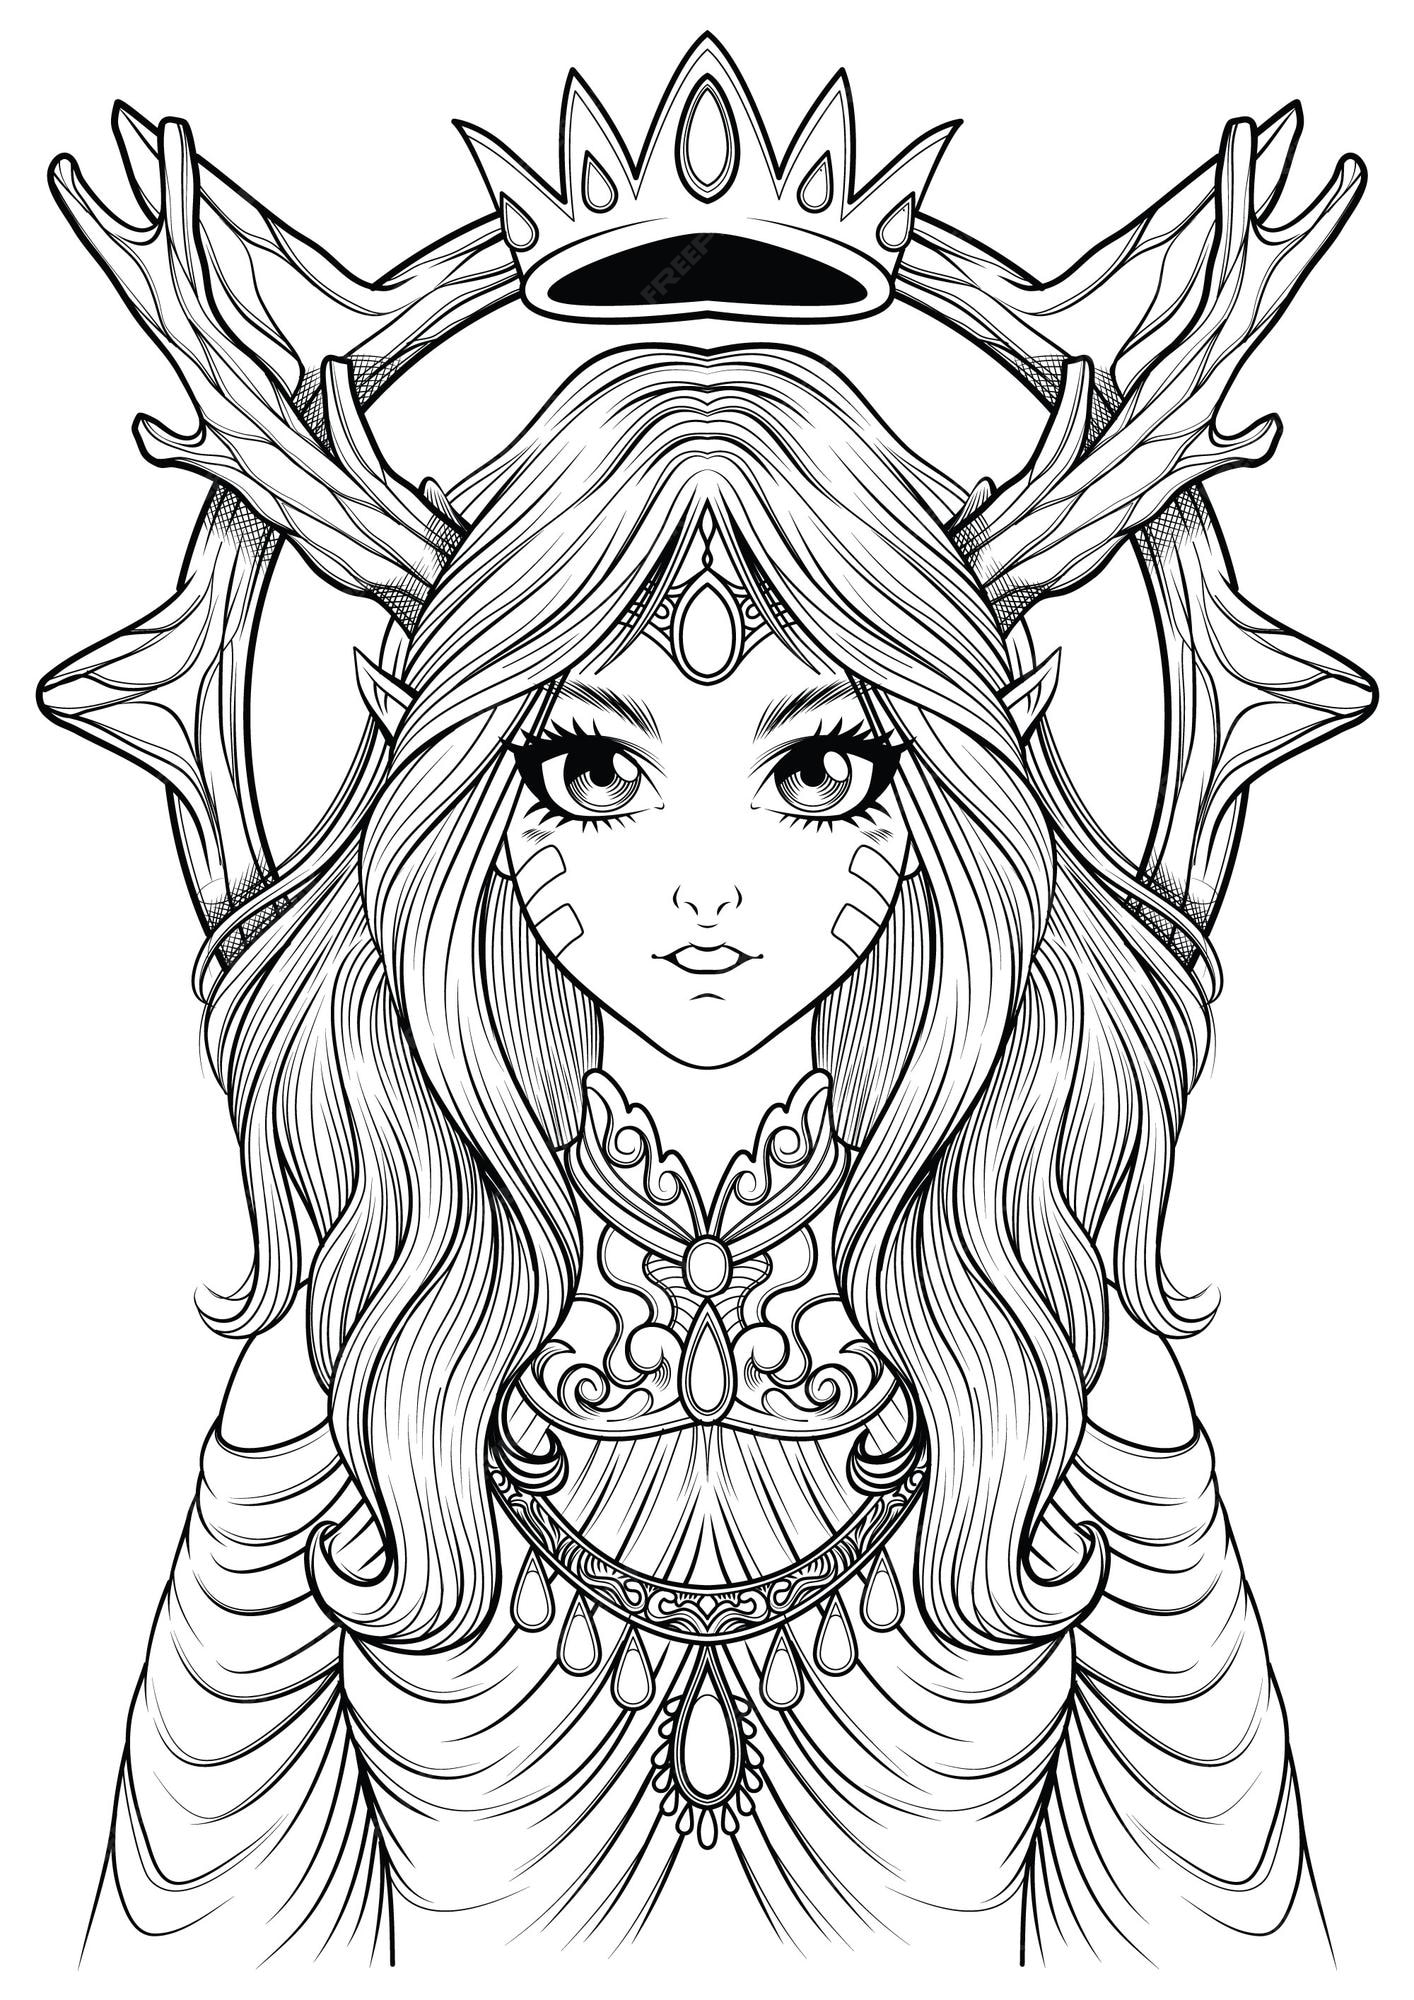 Premium vector coloring page of beautiful elf girl fantasy coloring book